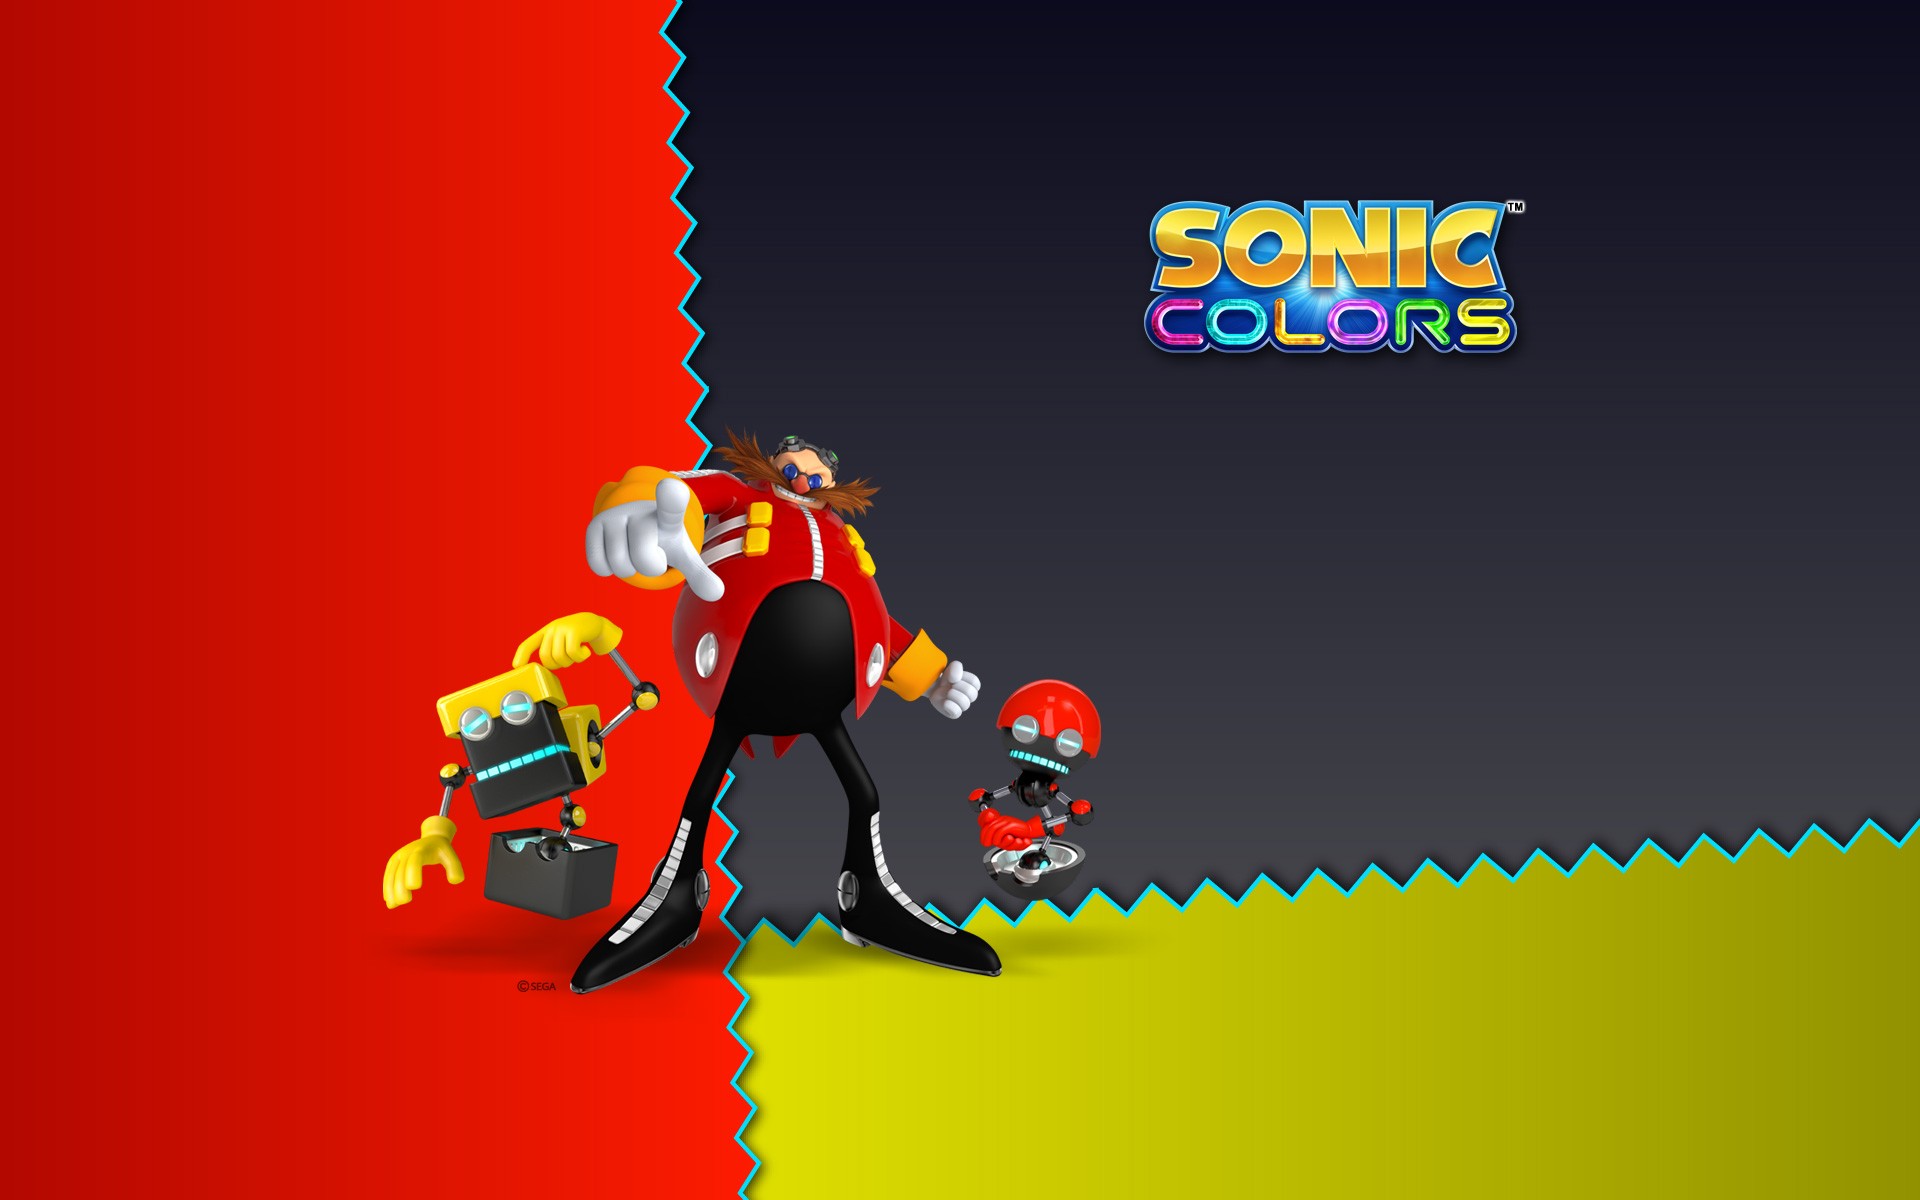 General 1920x1200 Sonic the Hedgehog video games Dr. Robotnik Sonic Colors video game characters Sega